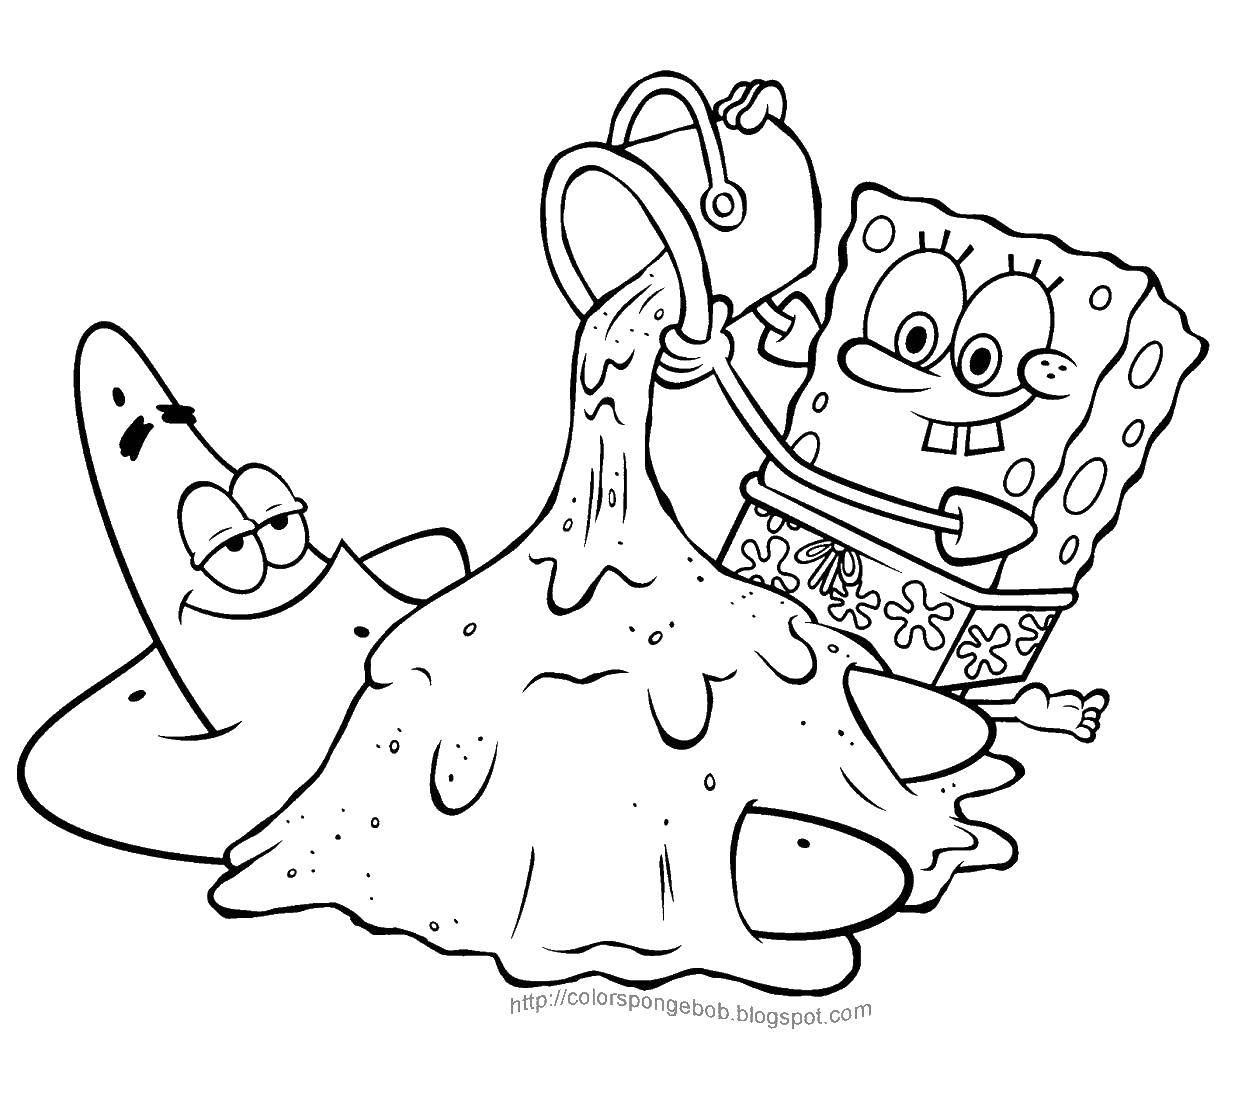 Coloring Fall asleep sand Patrick. Category Spongebob. Tags:  Cartoon character, spongebob, spongebob, Patrick.